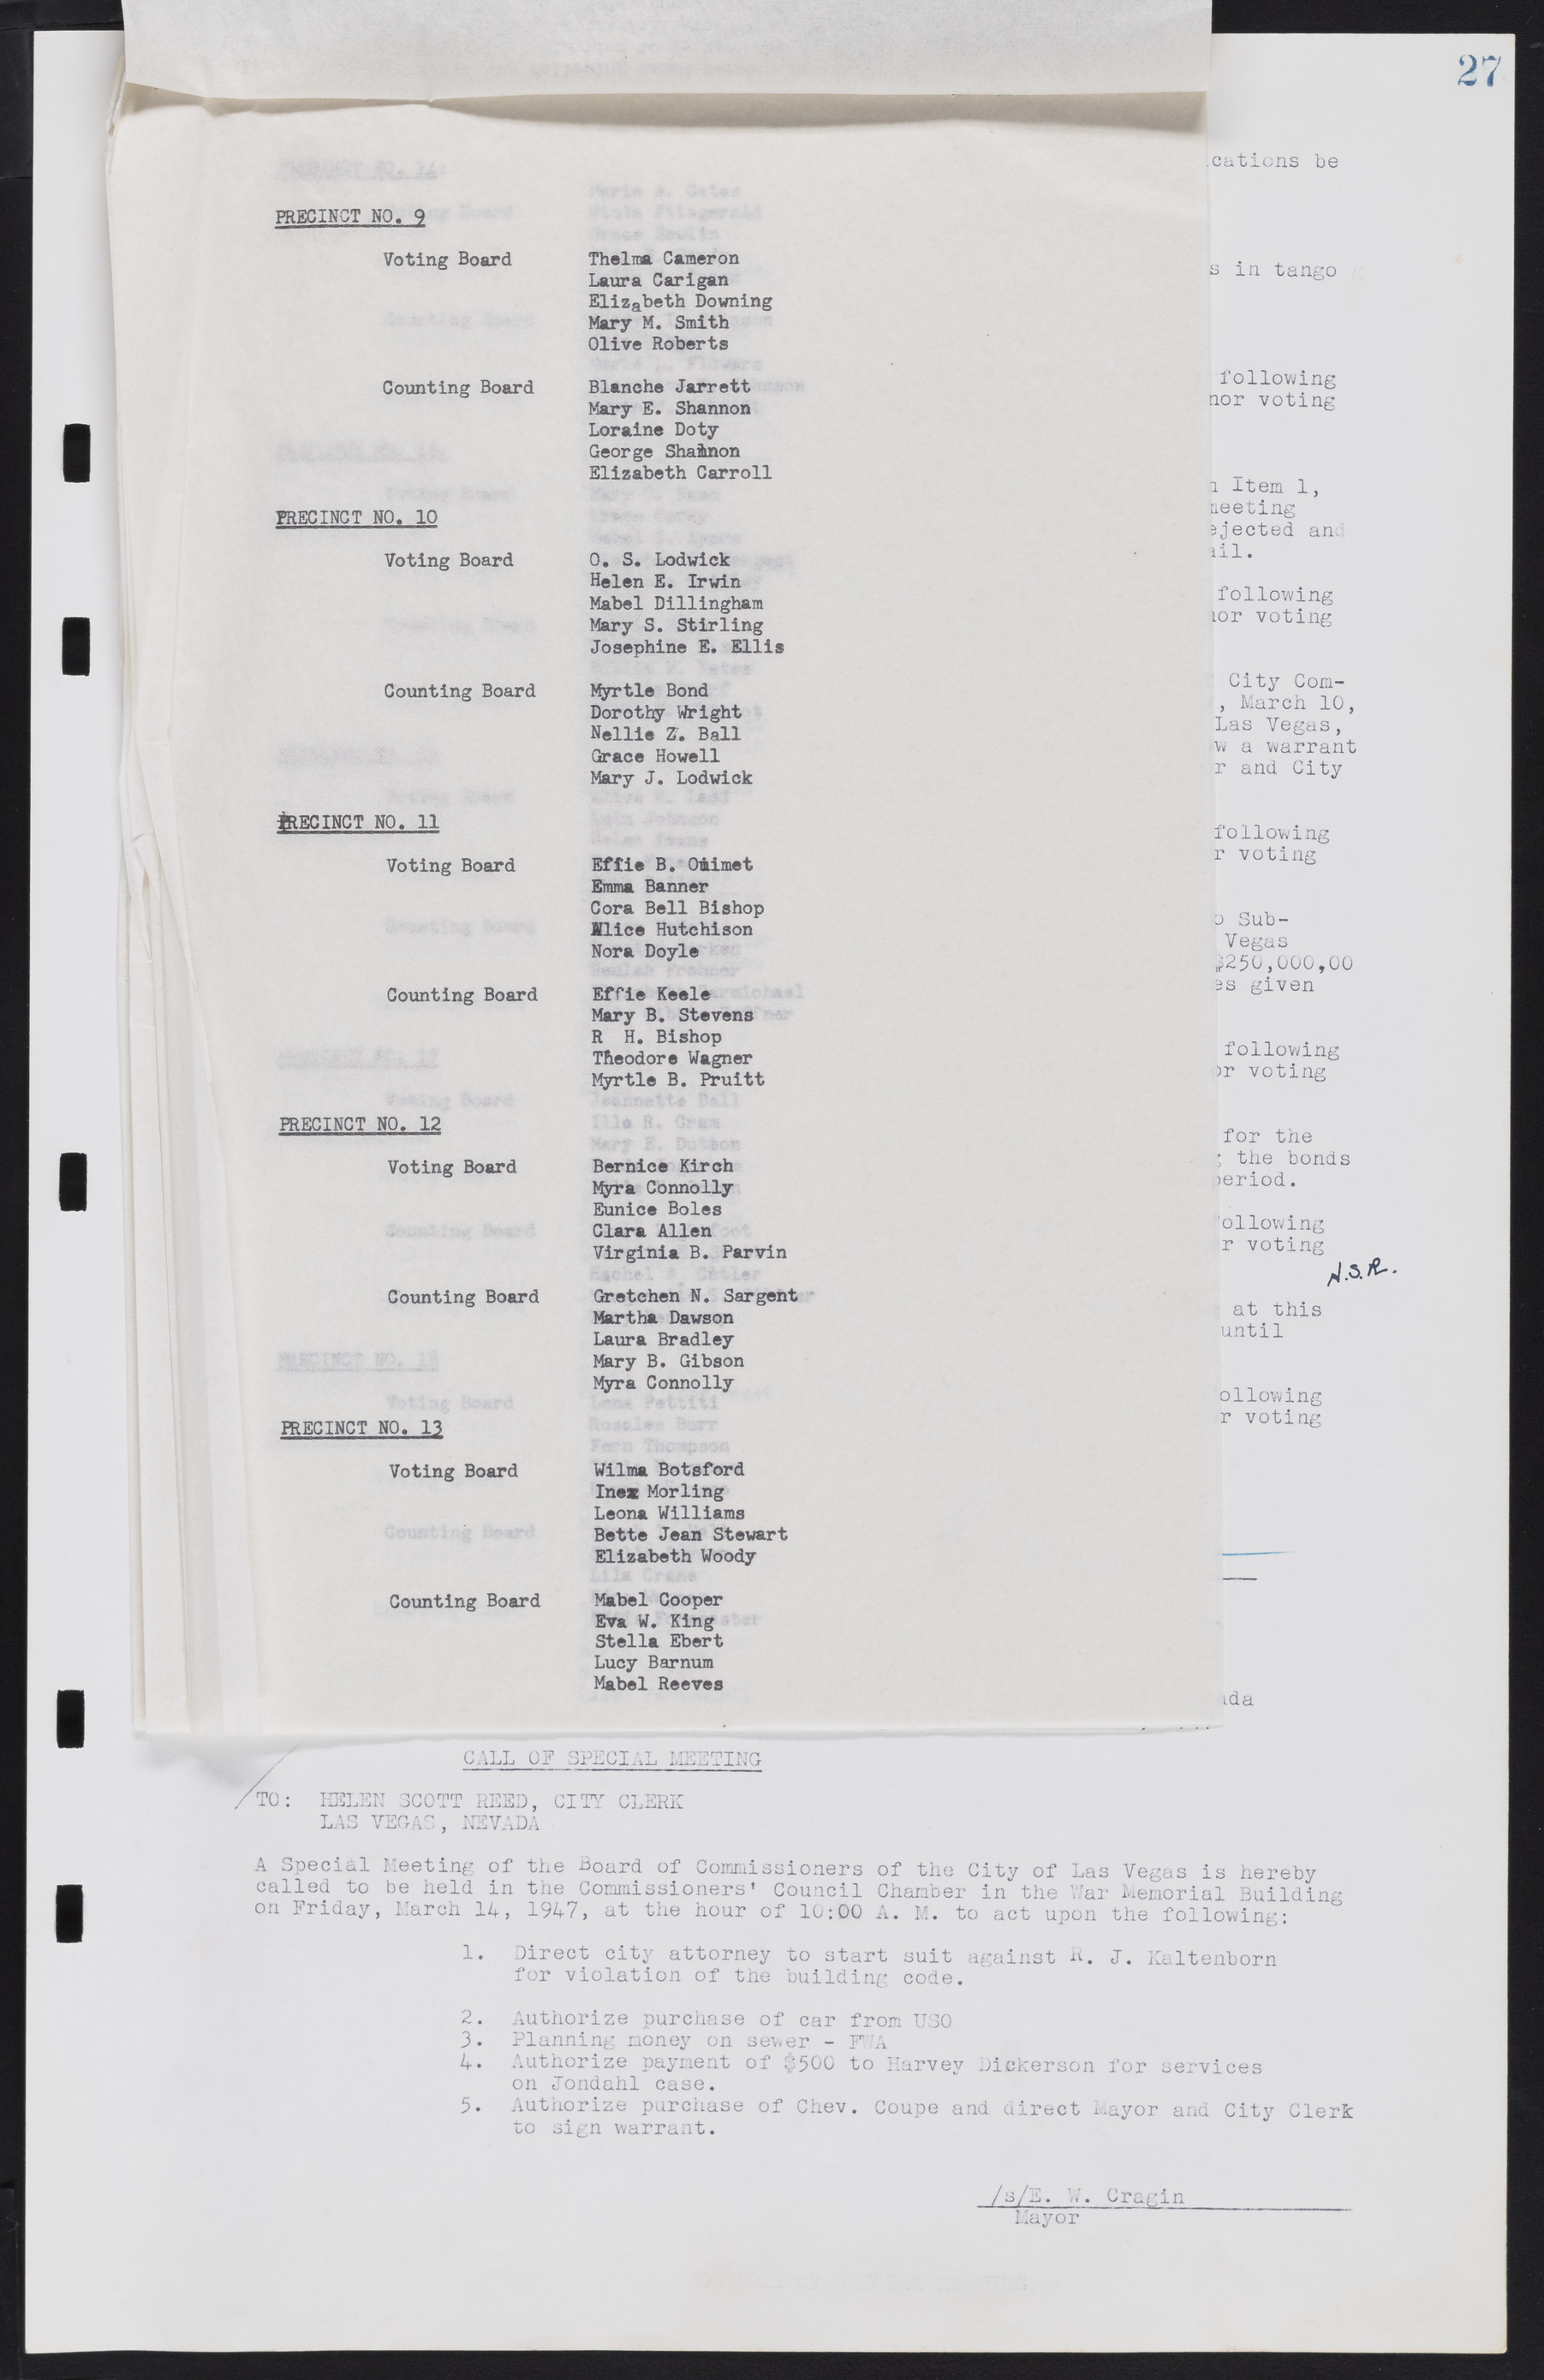 Las Vegas City Commission Minutes, January 7, 1947 to October 26, 1949, lvc000006-37